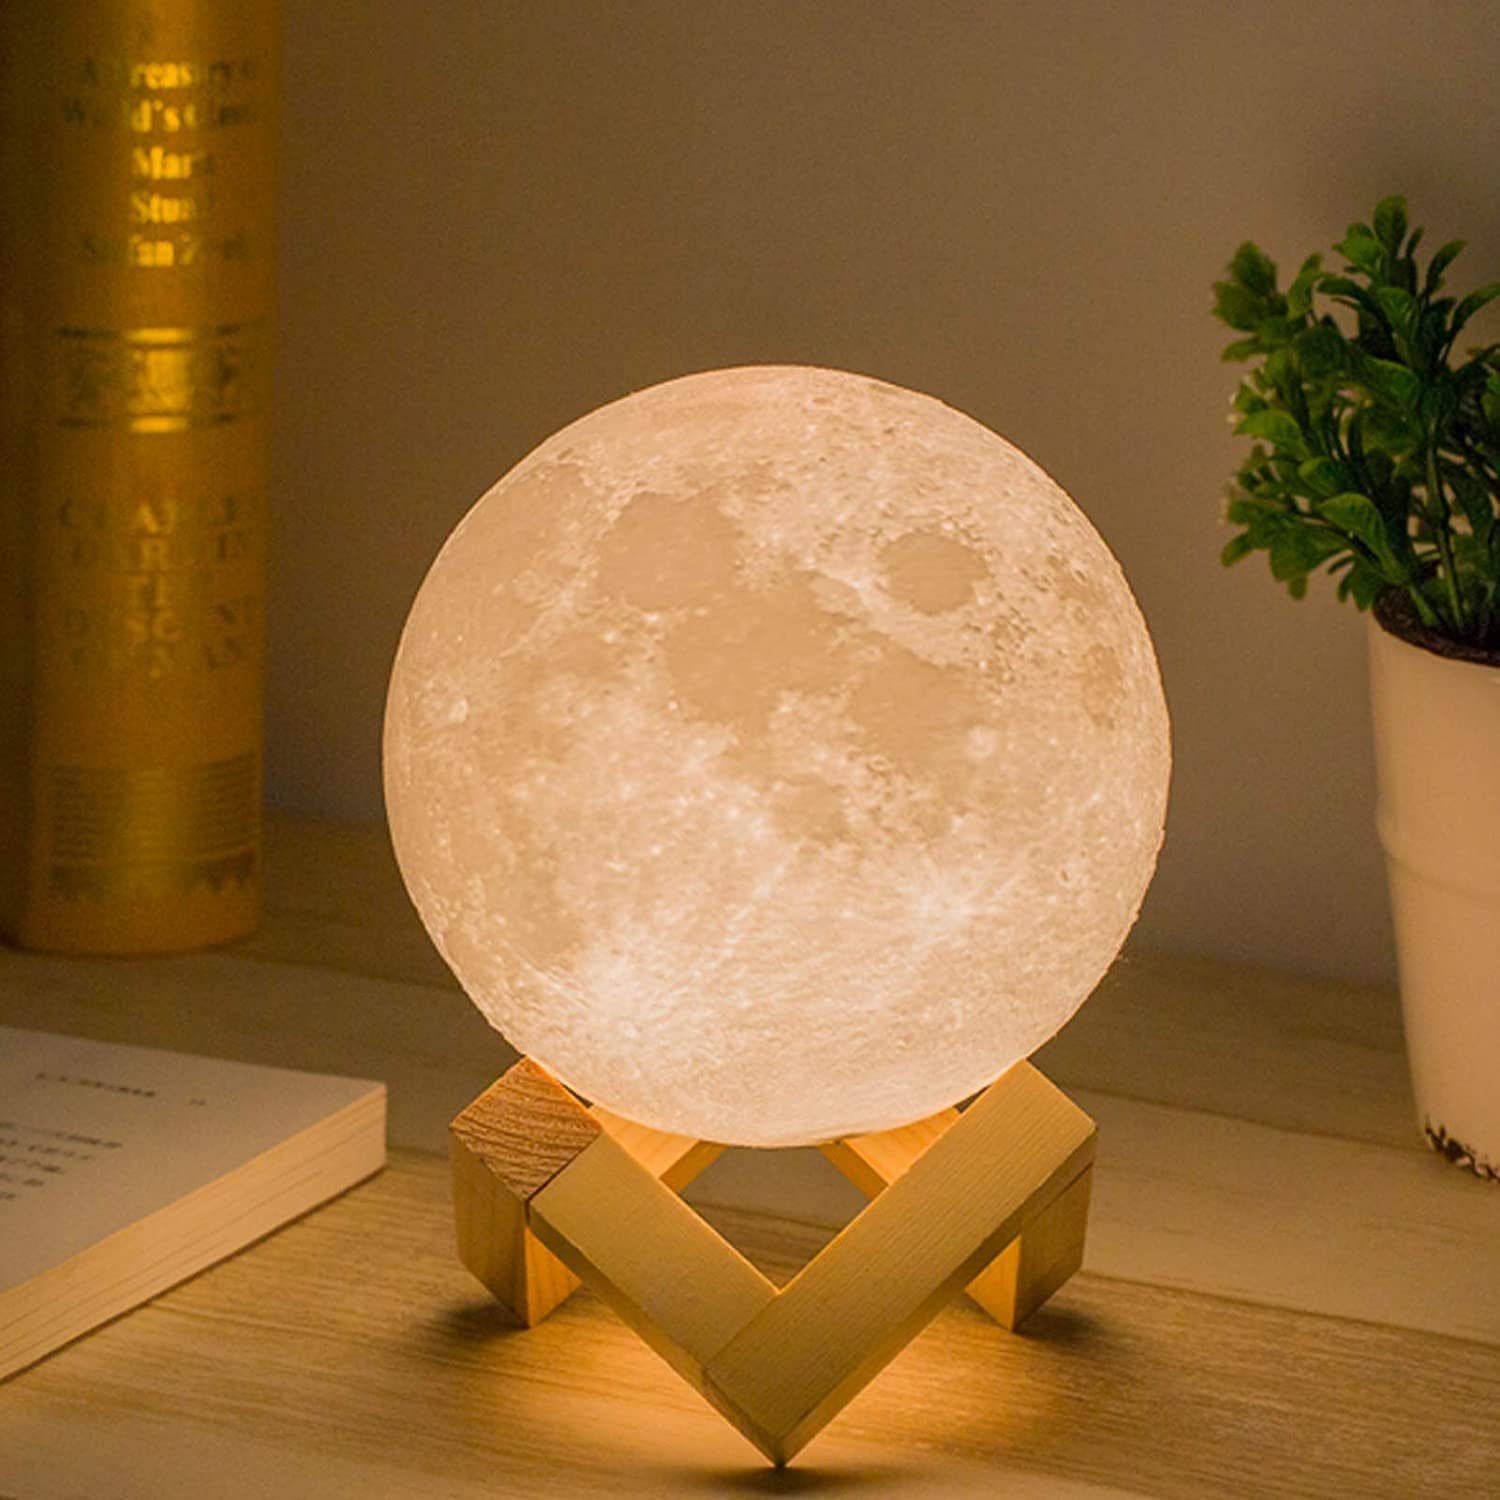 Lampe,Dekorative Mond Lampe, Druck USB Weiß, Lampen Warmes Nachtlicht Lade Dimmbar Touch Haiaveng Lampe,Kleines Mond Nachtlicht,3D